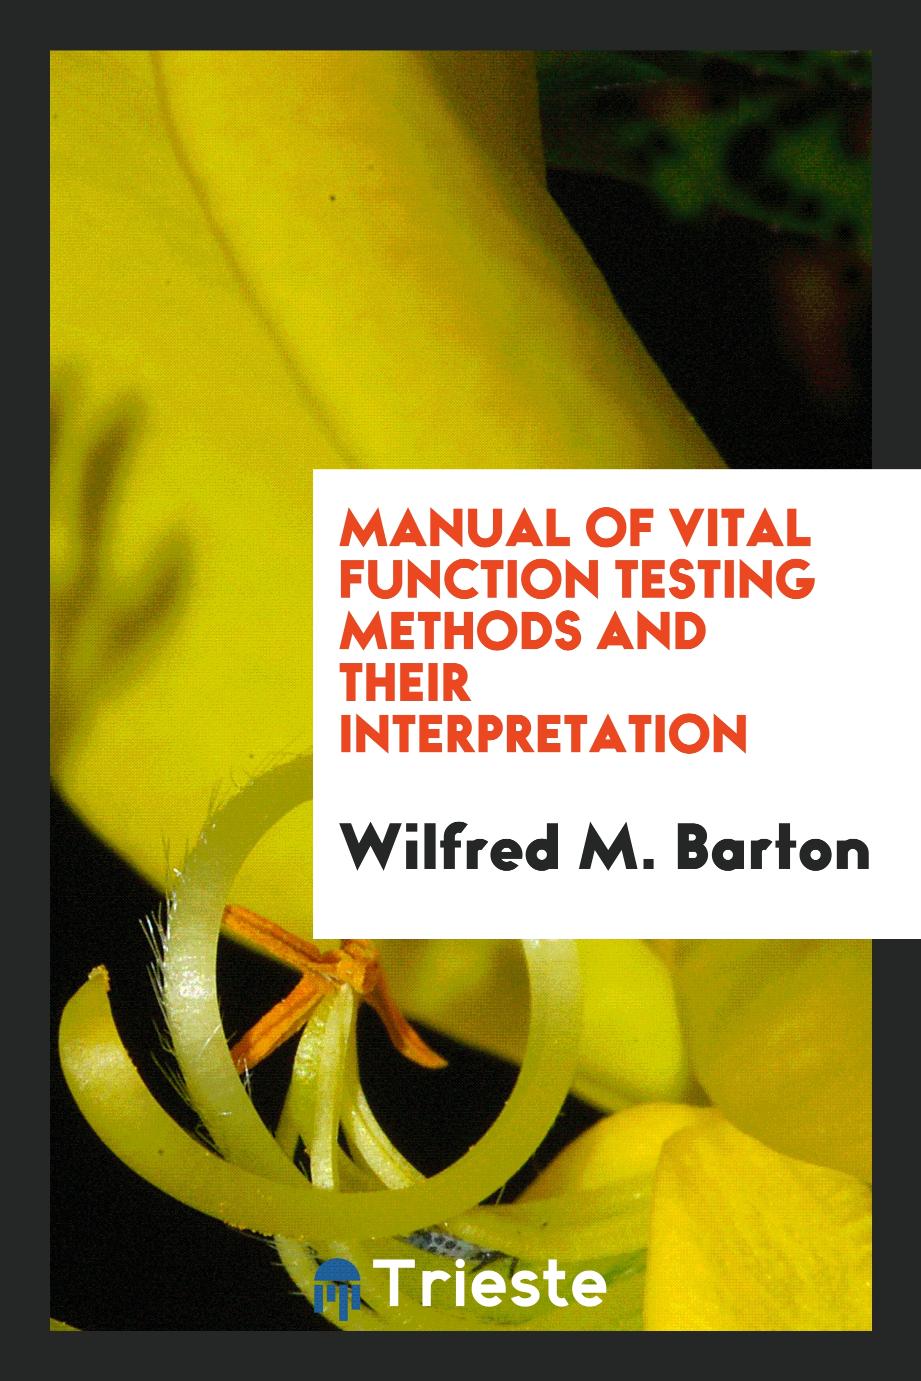 Manual of vital function testing methods and their interpretation